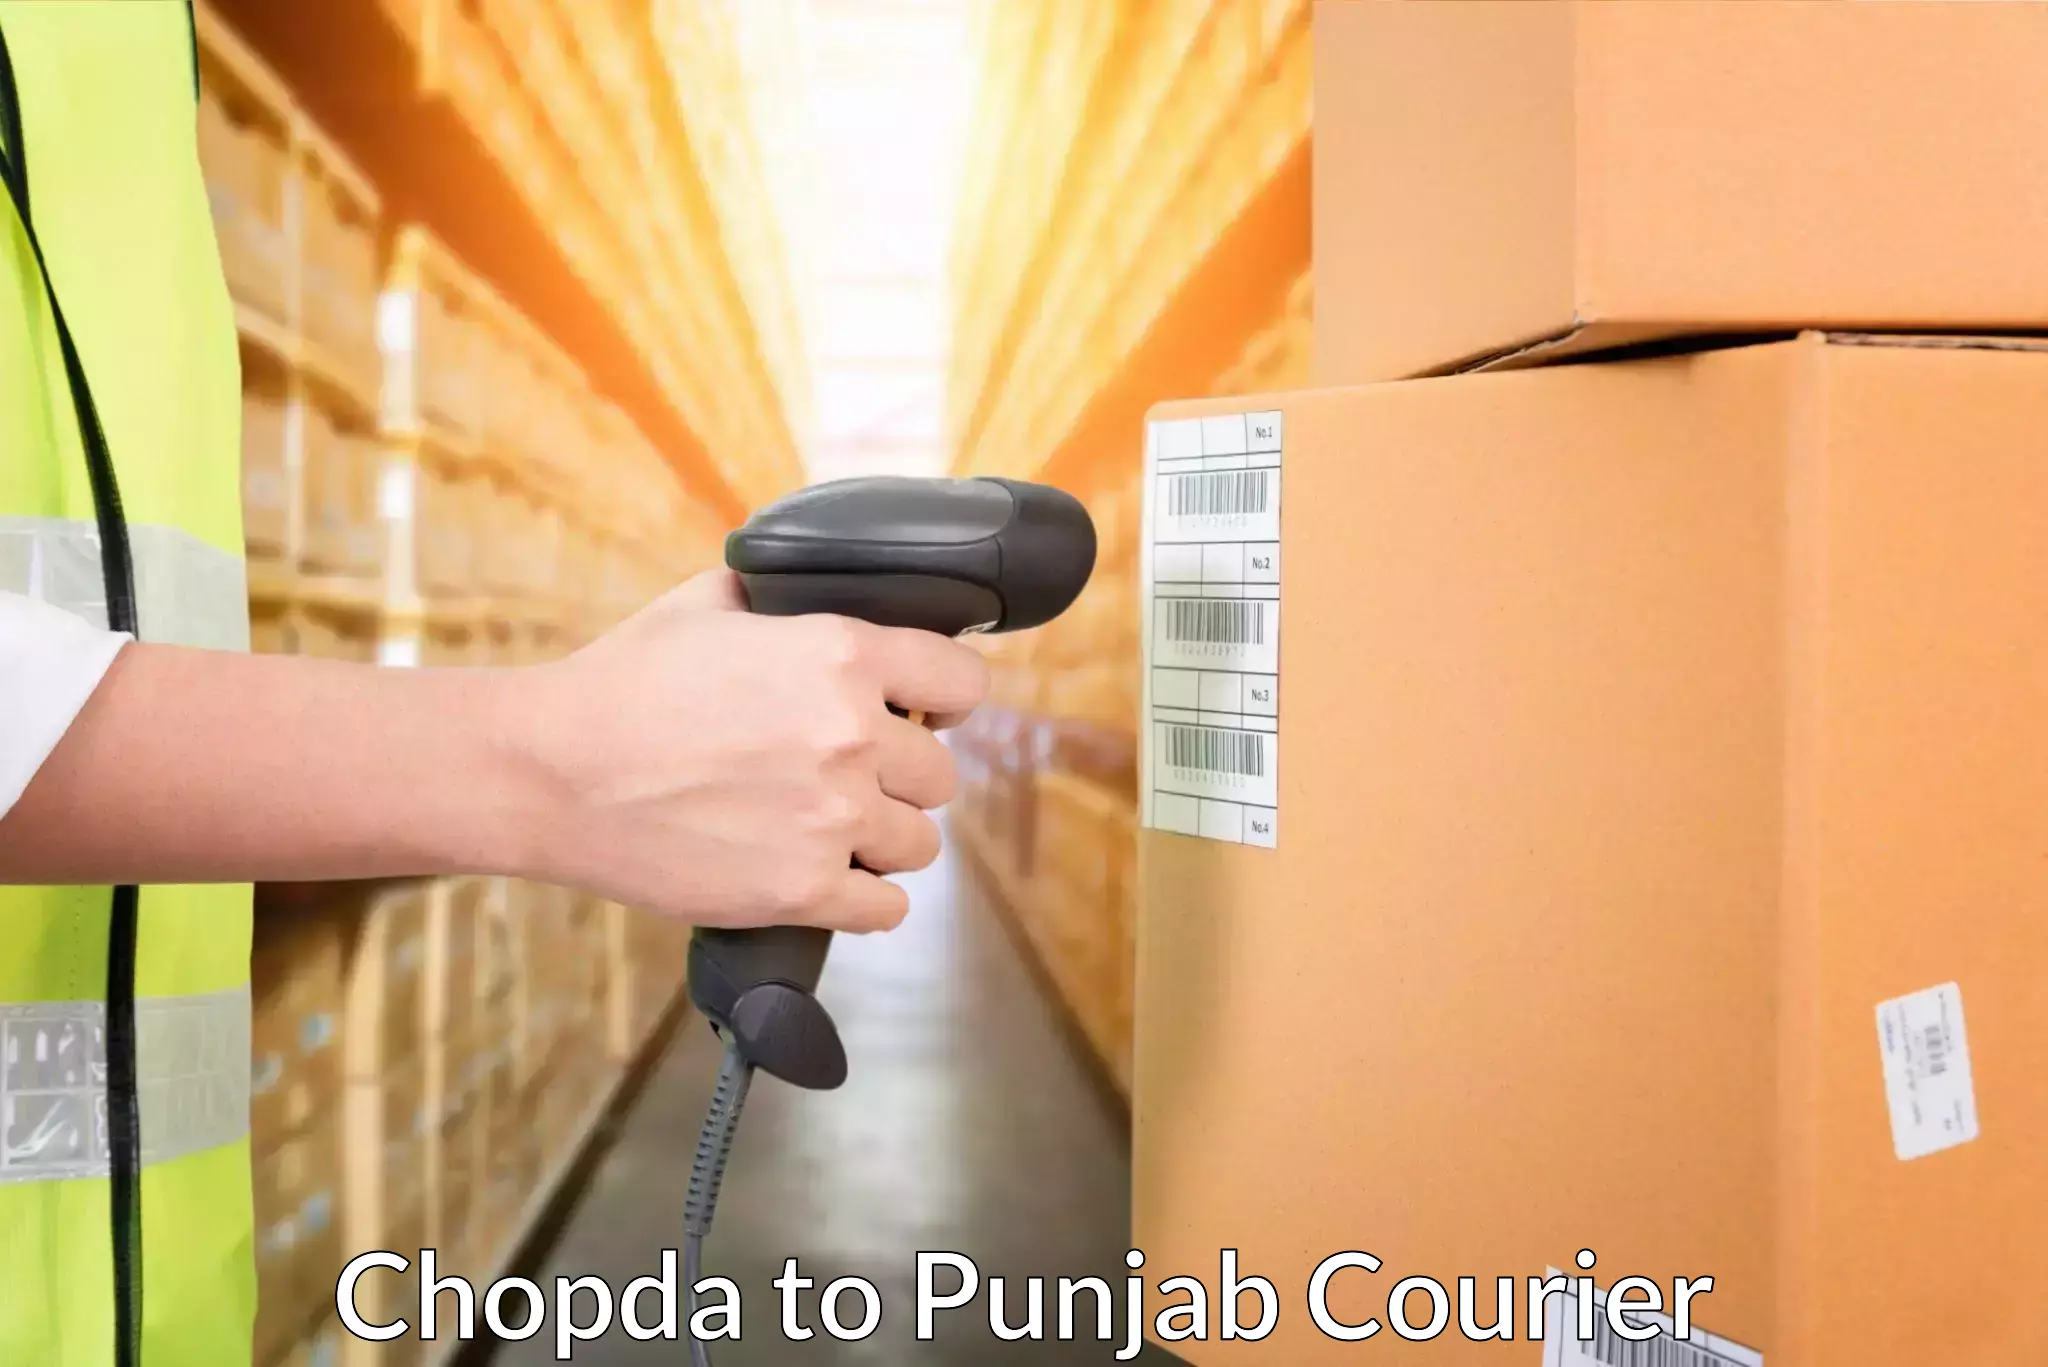 Business shipping needs Chopda to Ajnala